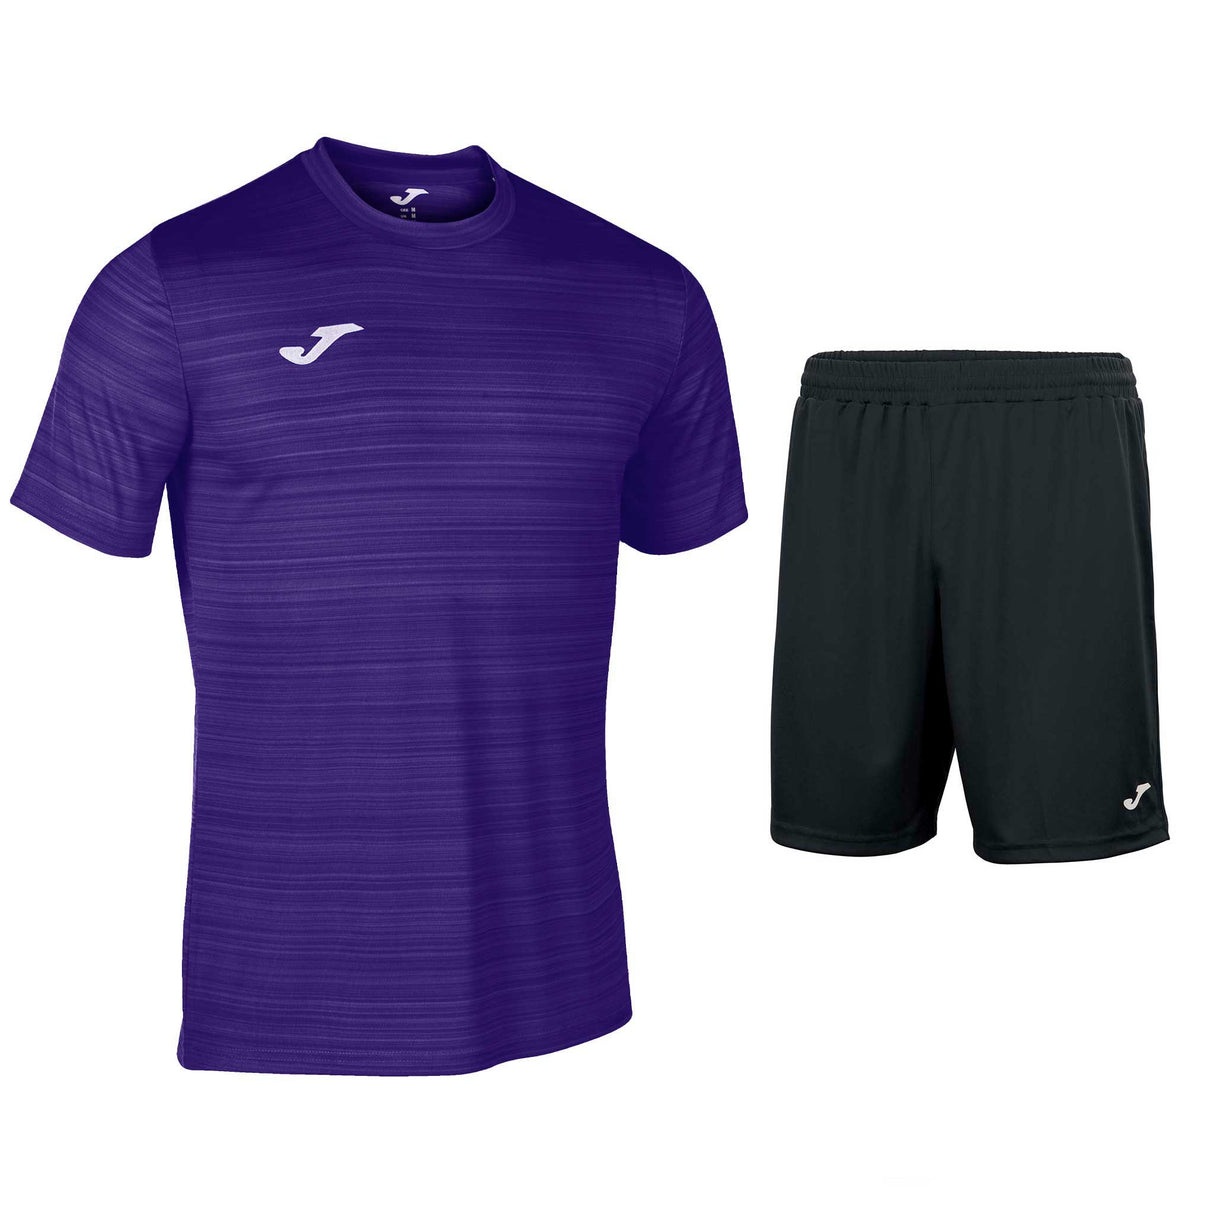 JOMA Grafity III Soccer Shirt and Shorts Set